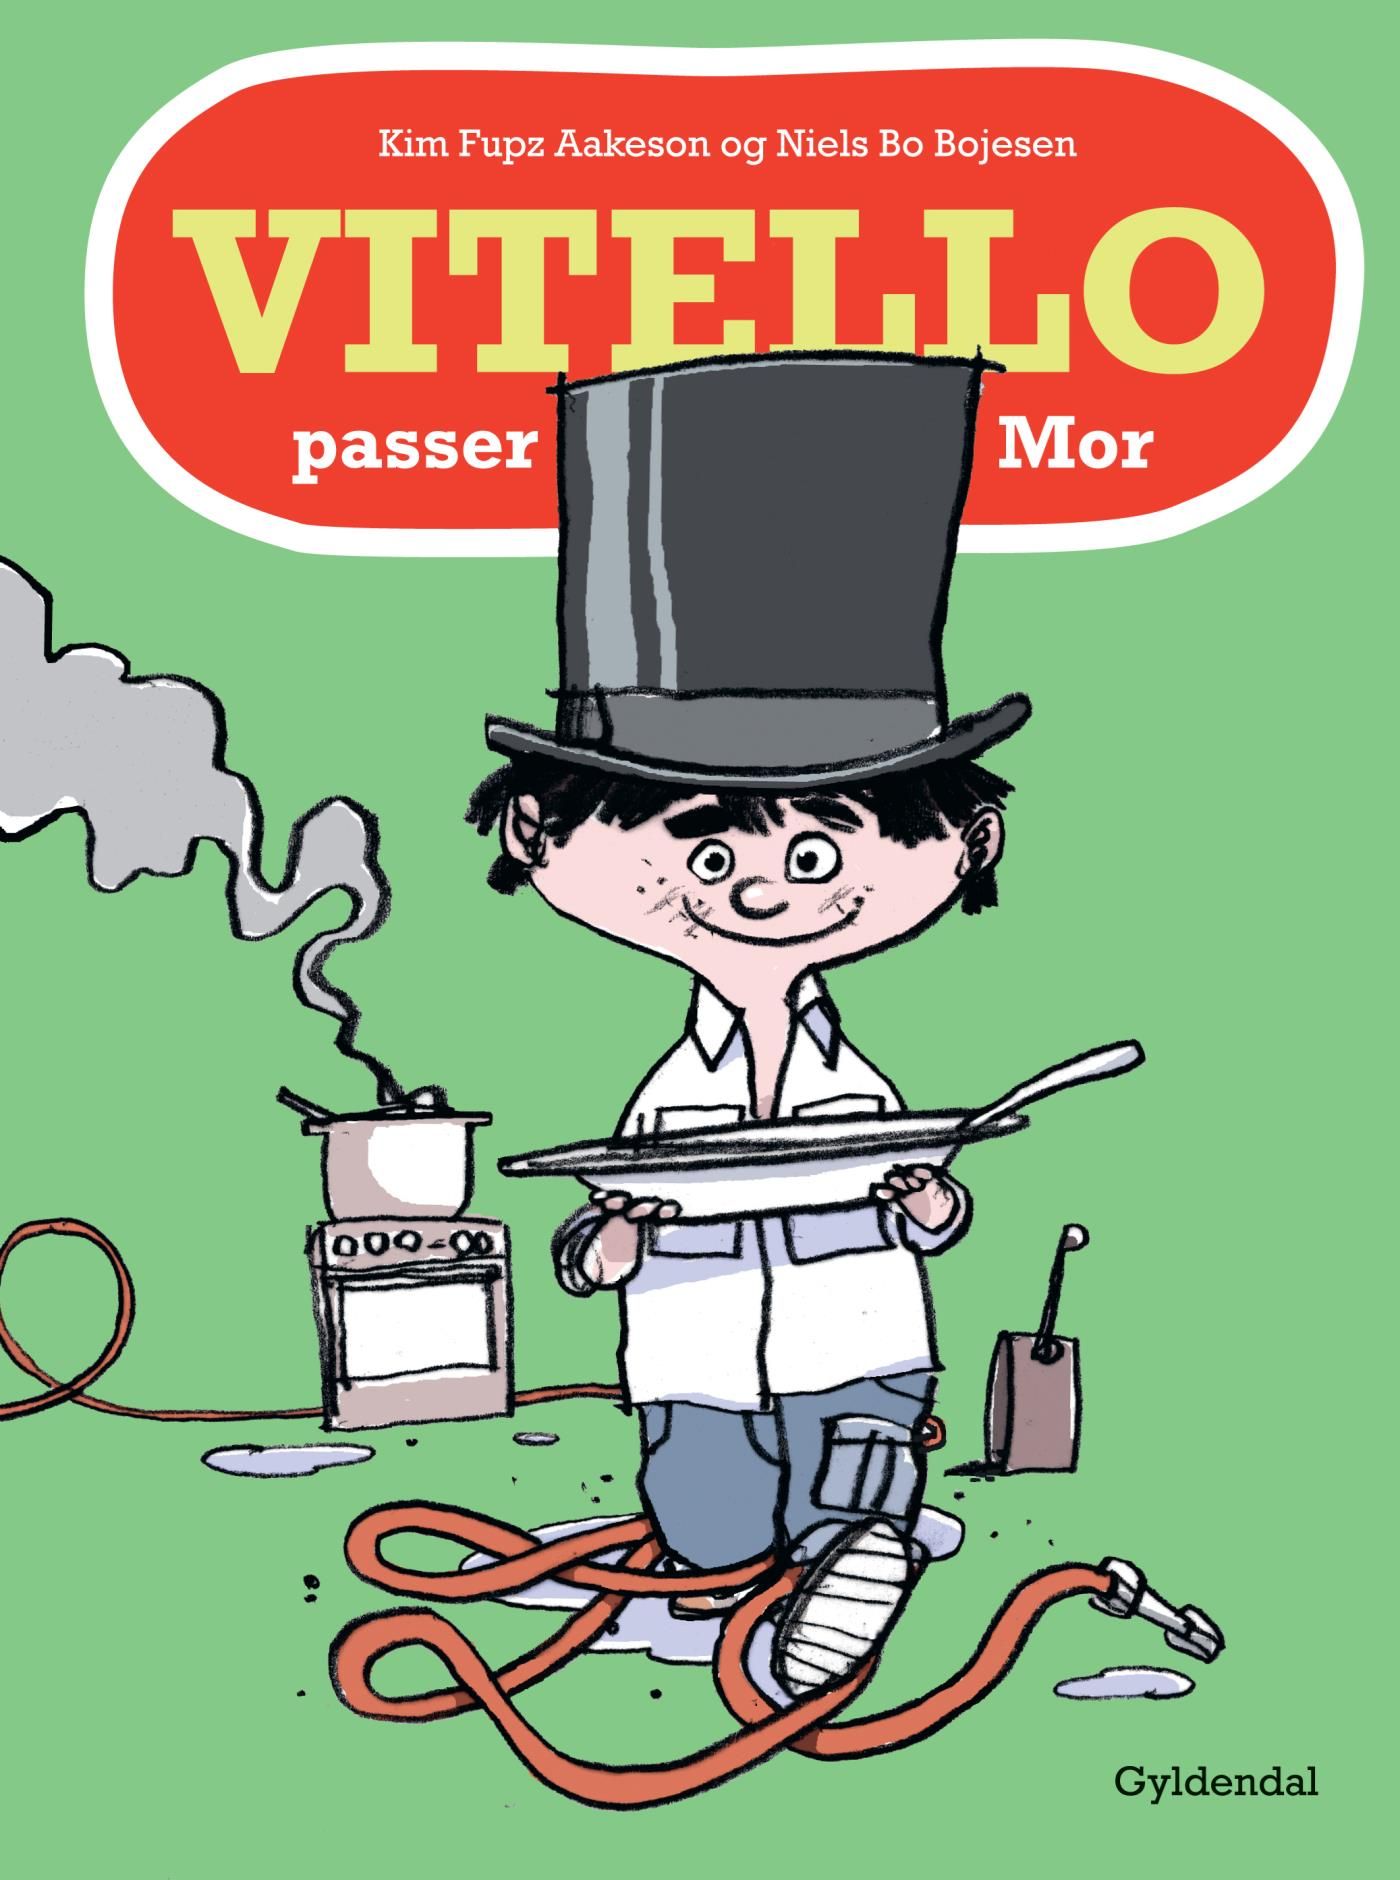 Vitello passer Mor - Lyt&læs, eBook by Kim Fupz Aakeson